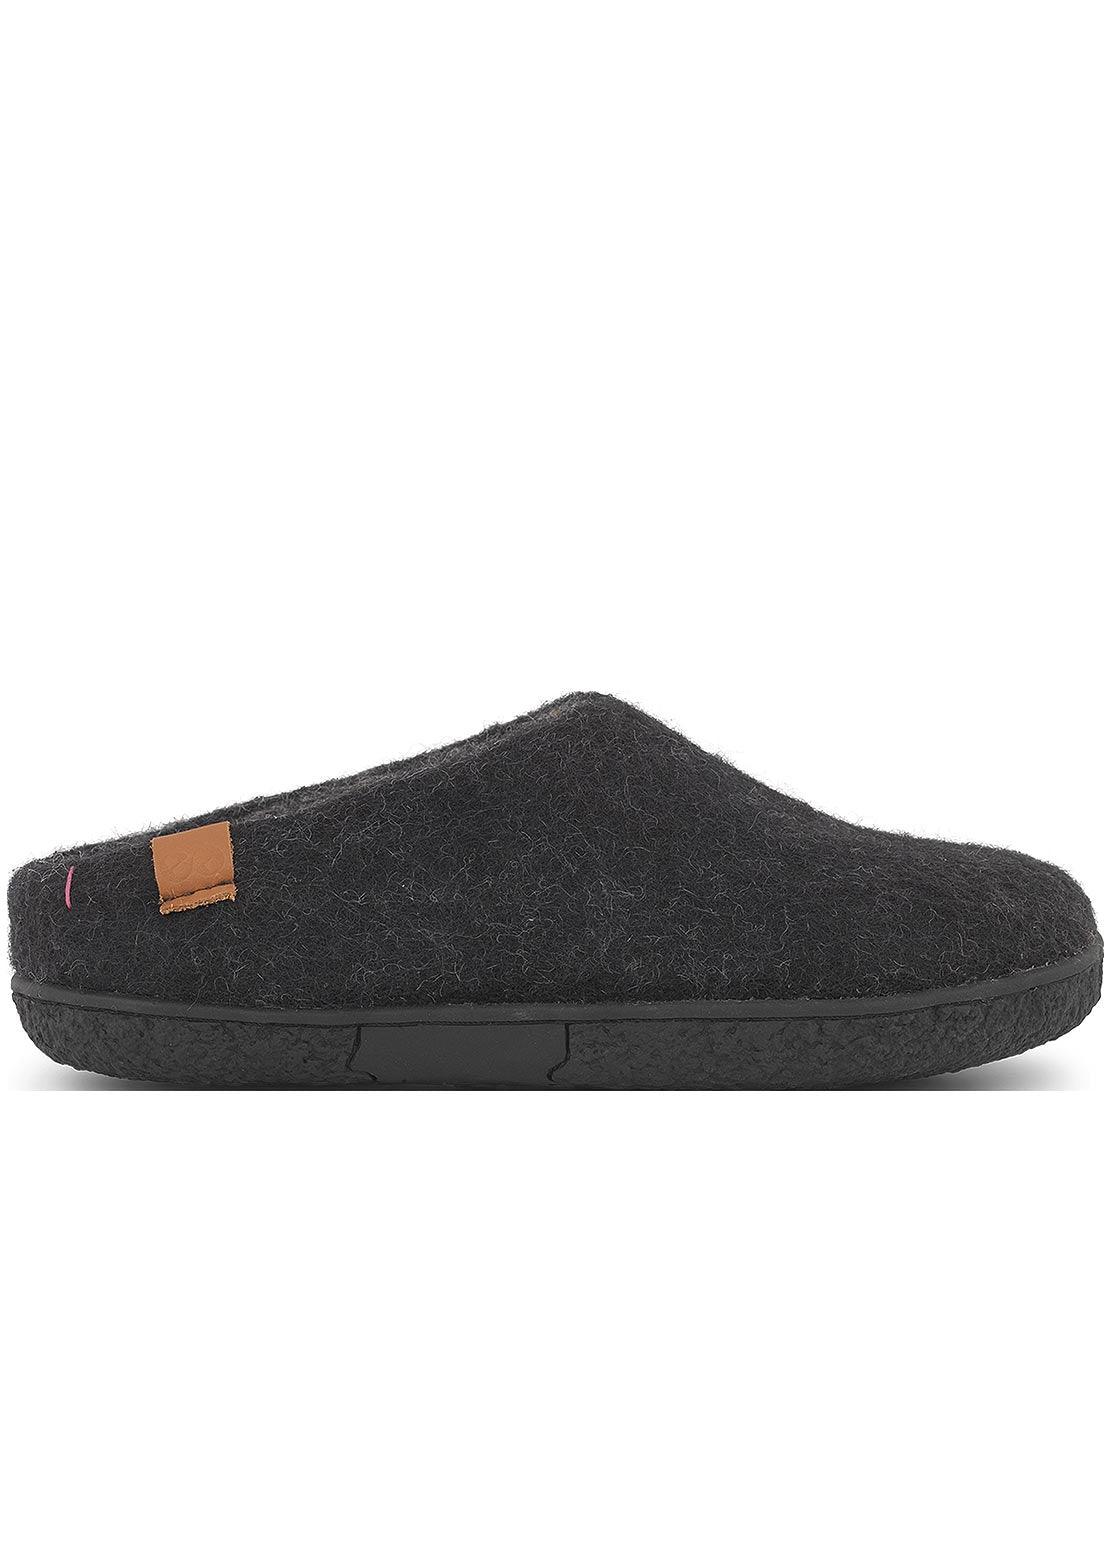 Wool Unisex Tibet Rubber Sole Open Heel Slippers Black